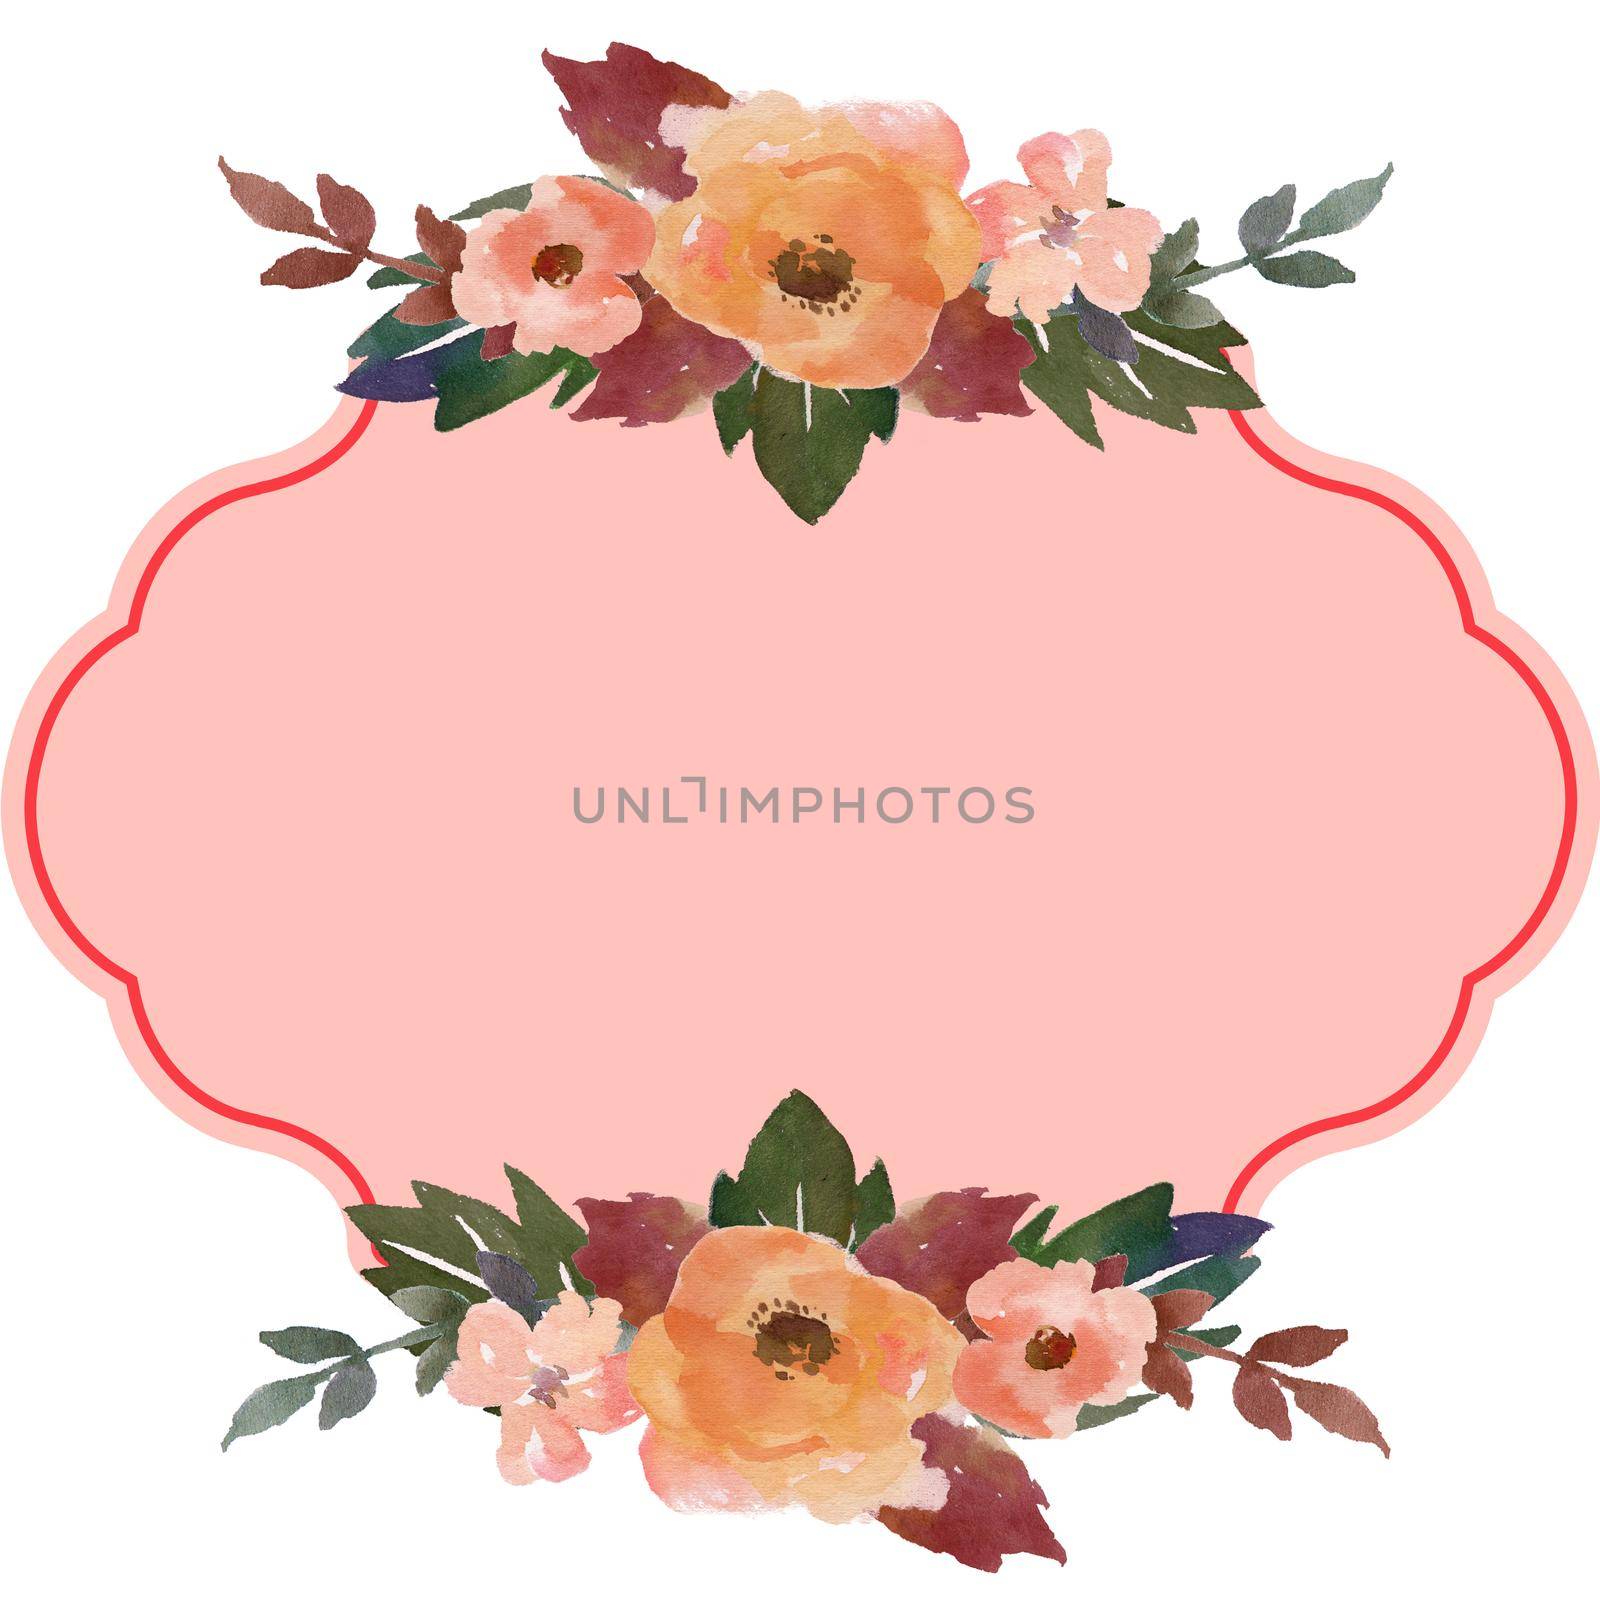 watercolor flower frame. Floral wedding invitation card, greeting card with watercolor flower concept